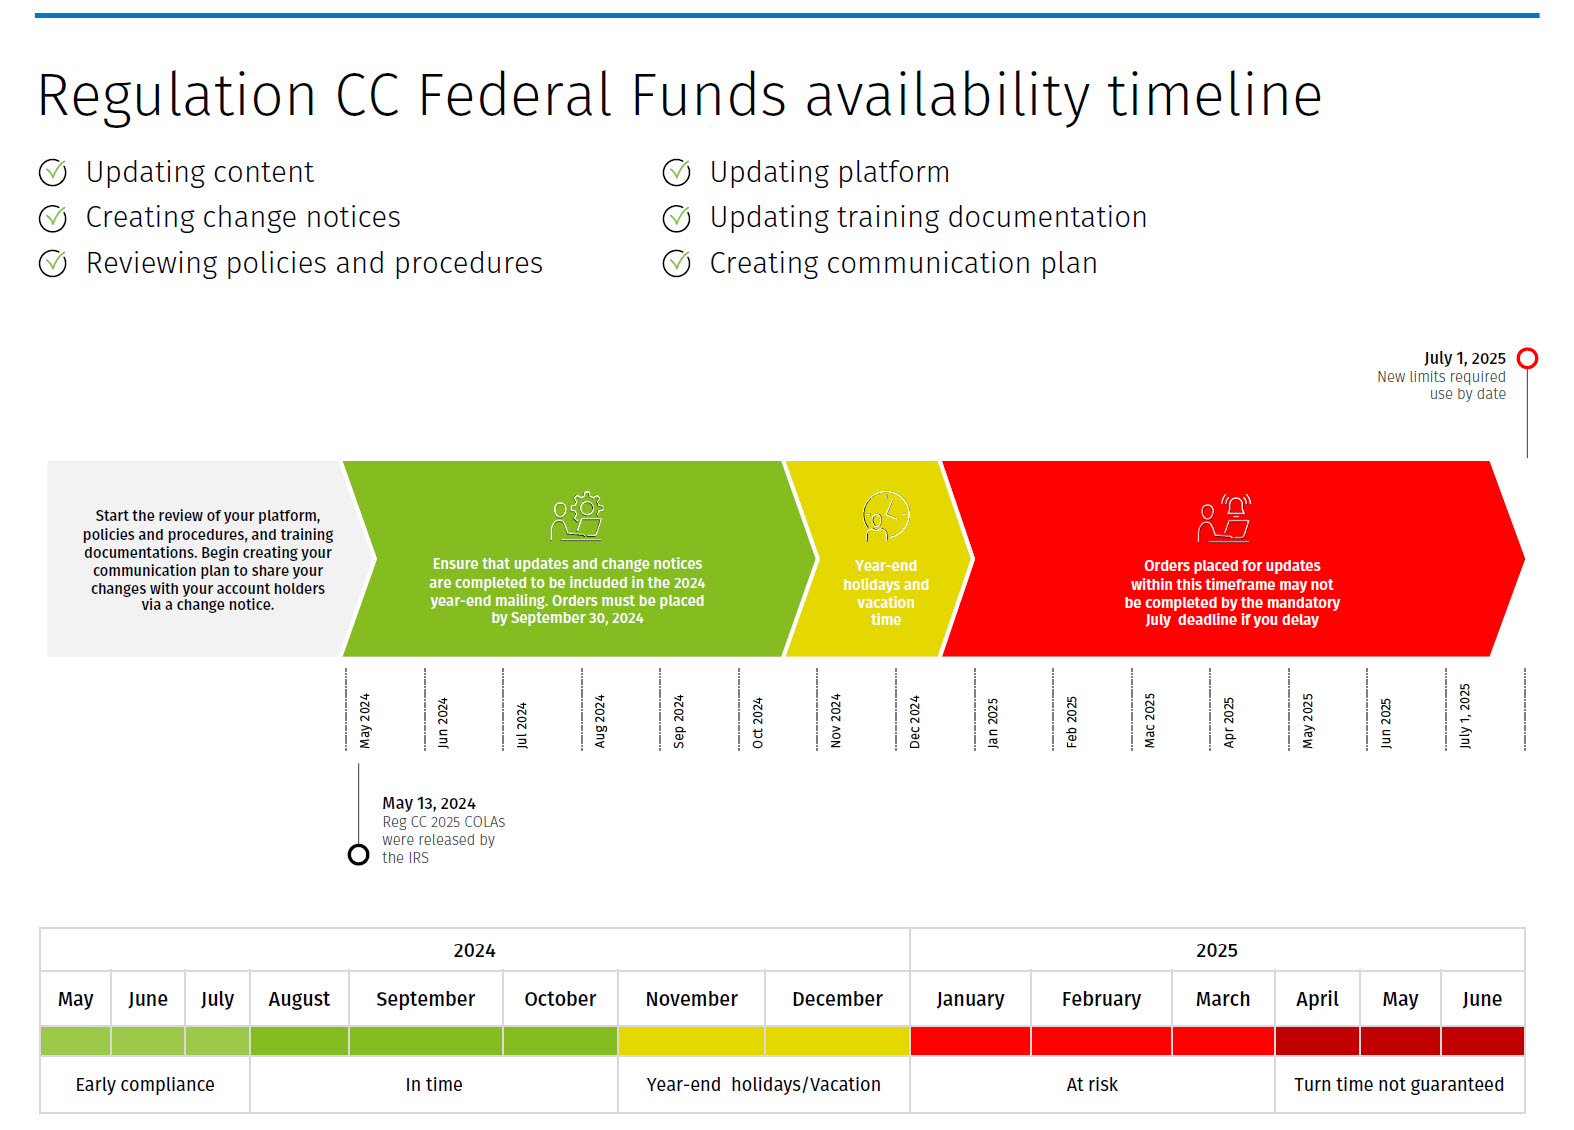 Reg CC Federal Funds Availability timeline